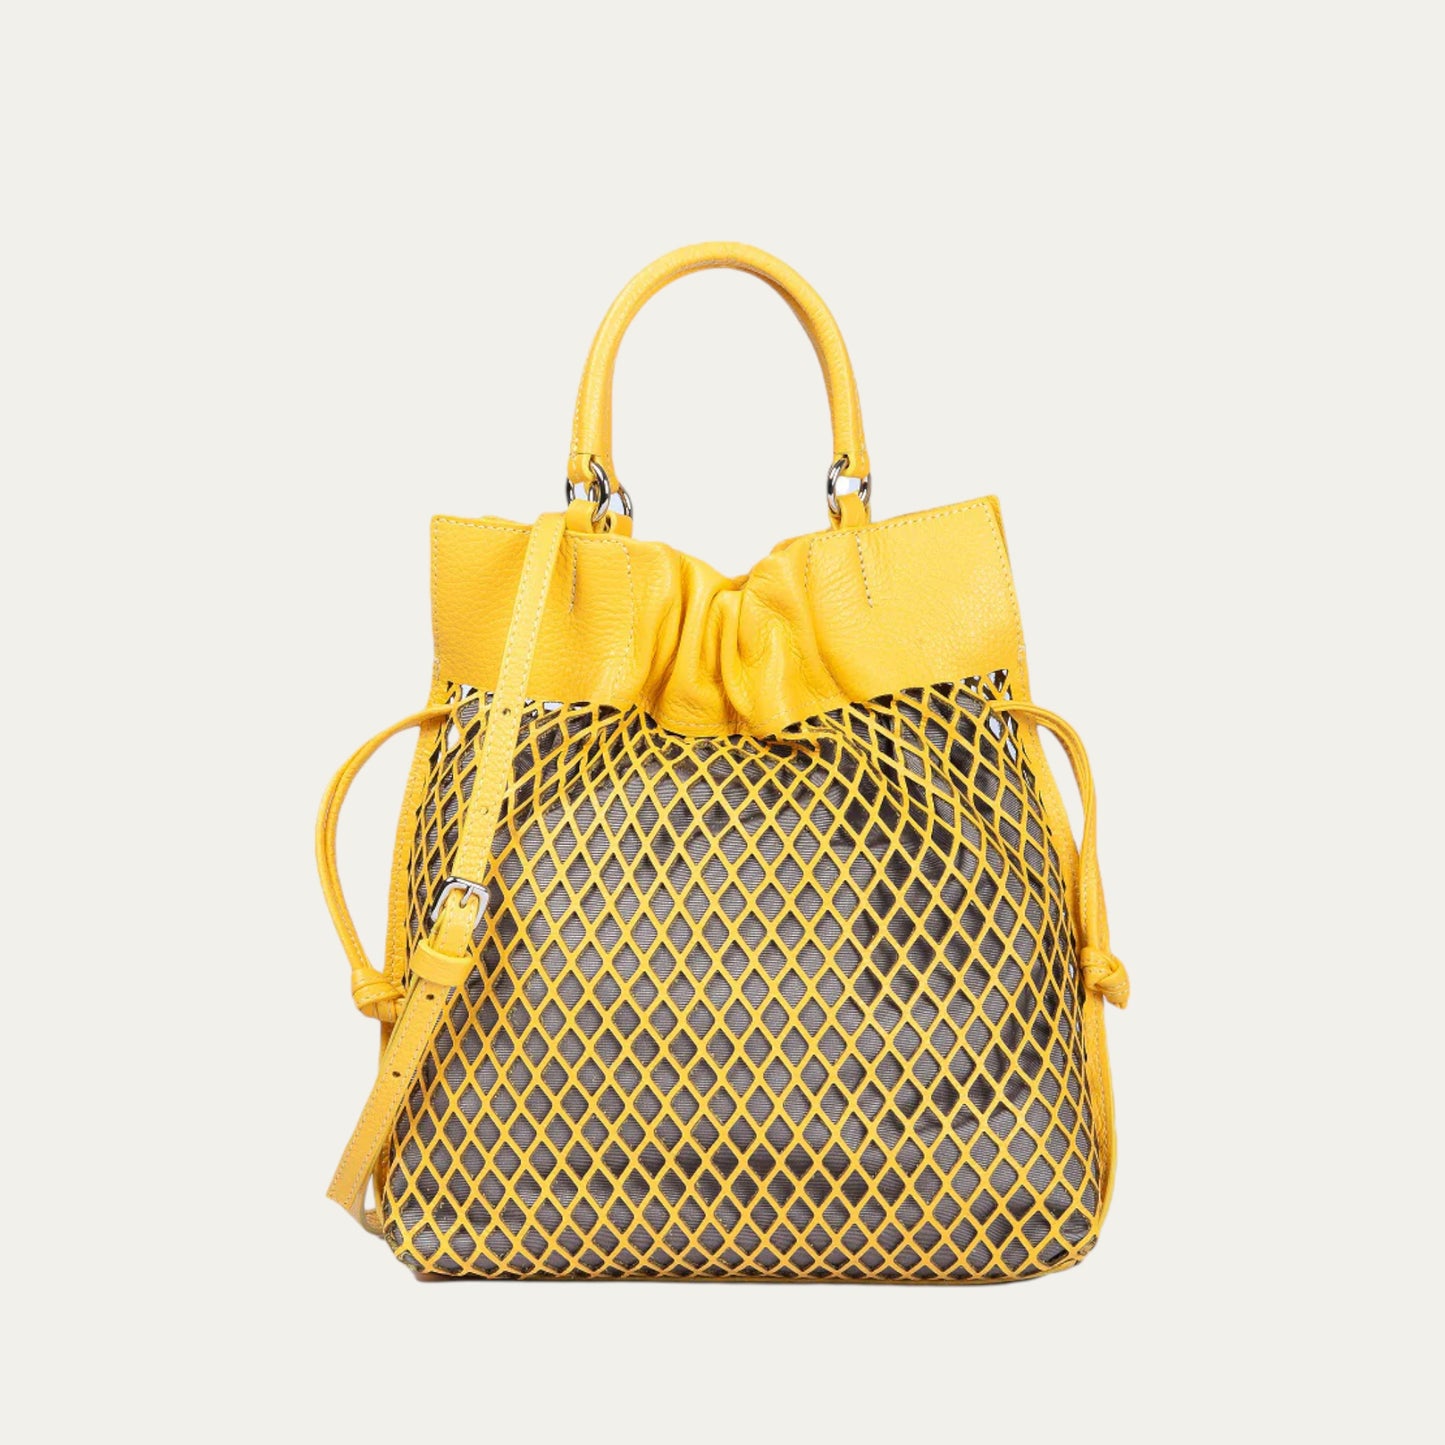 ISABELLA - Calfskin Yellow Top Handle Bag